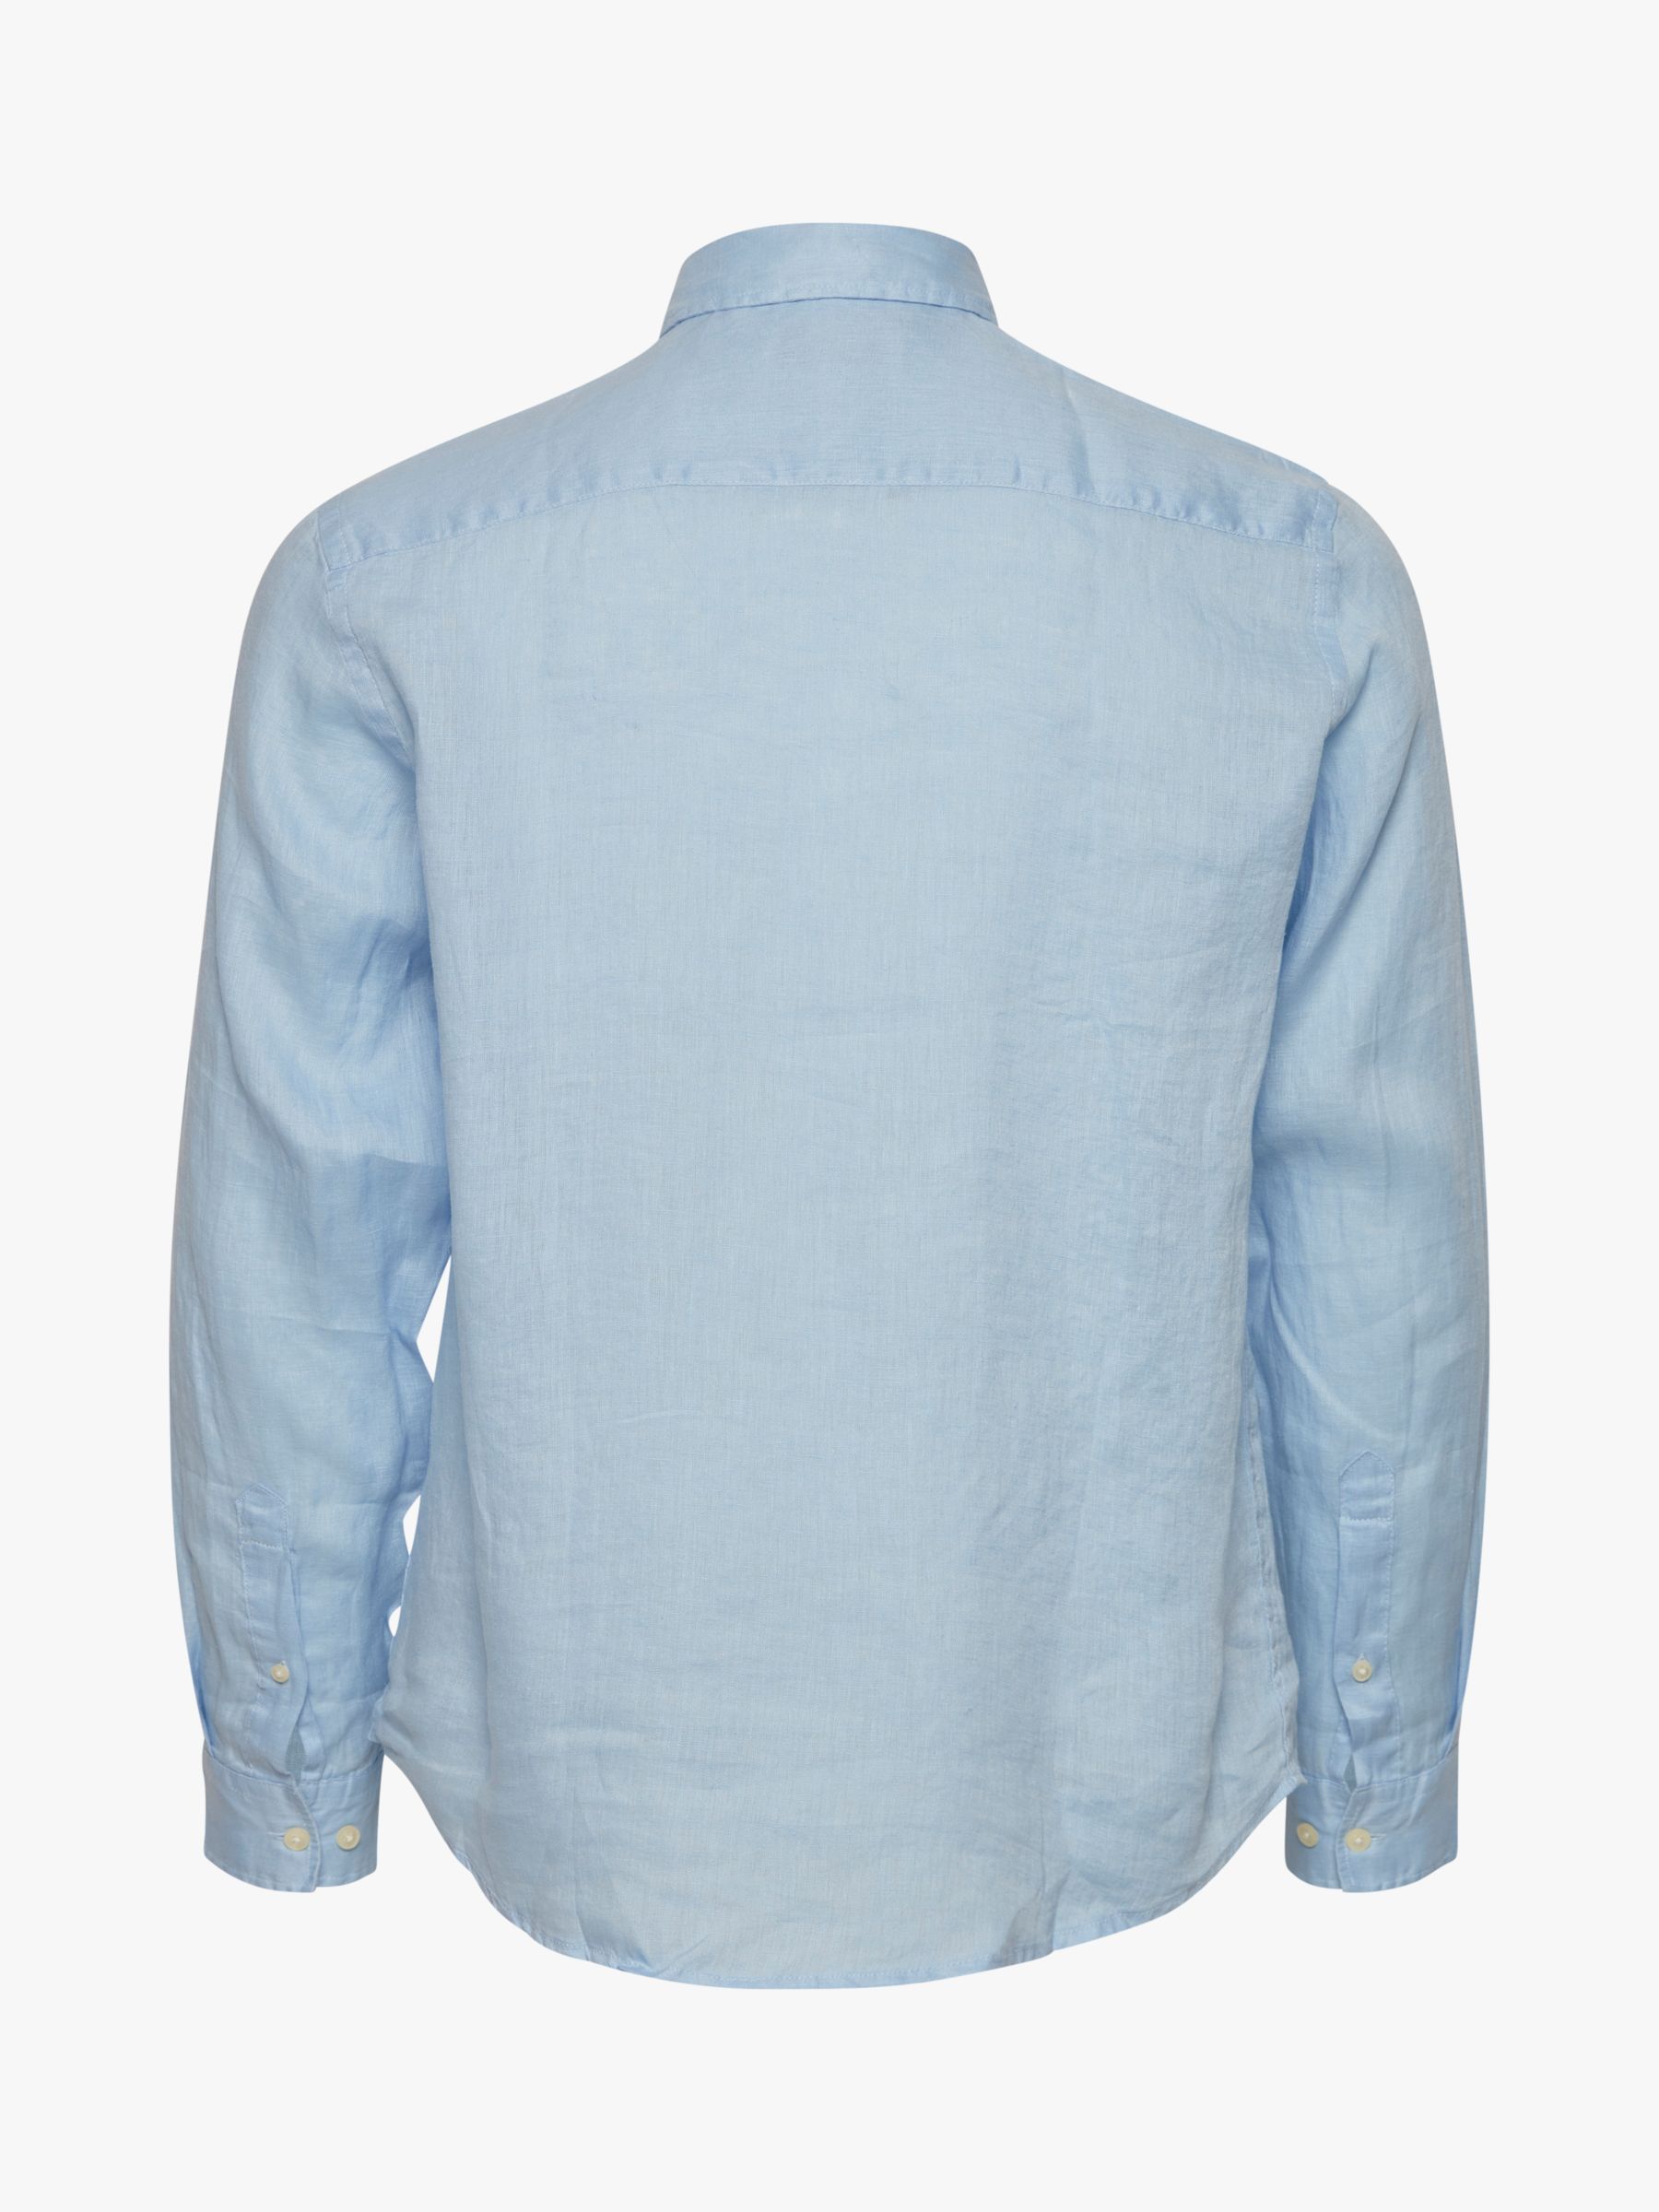 Casual Friday Anton Long Sleeve Linen Shirt , Chambray Blue, S